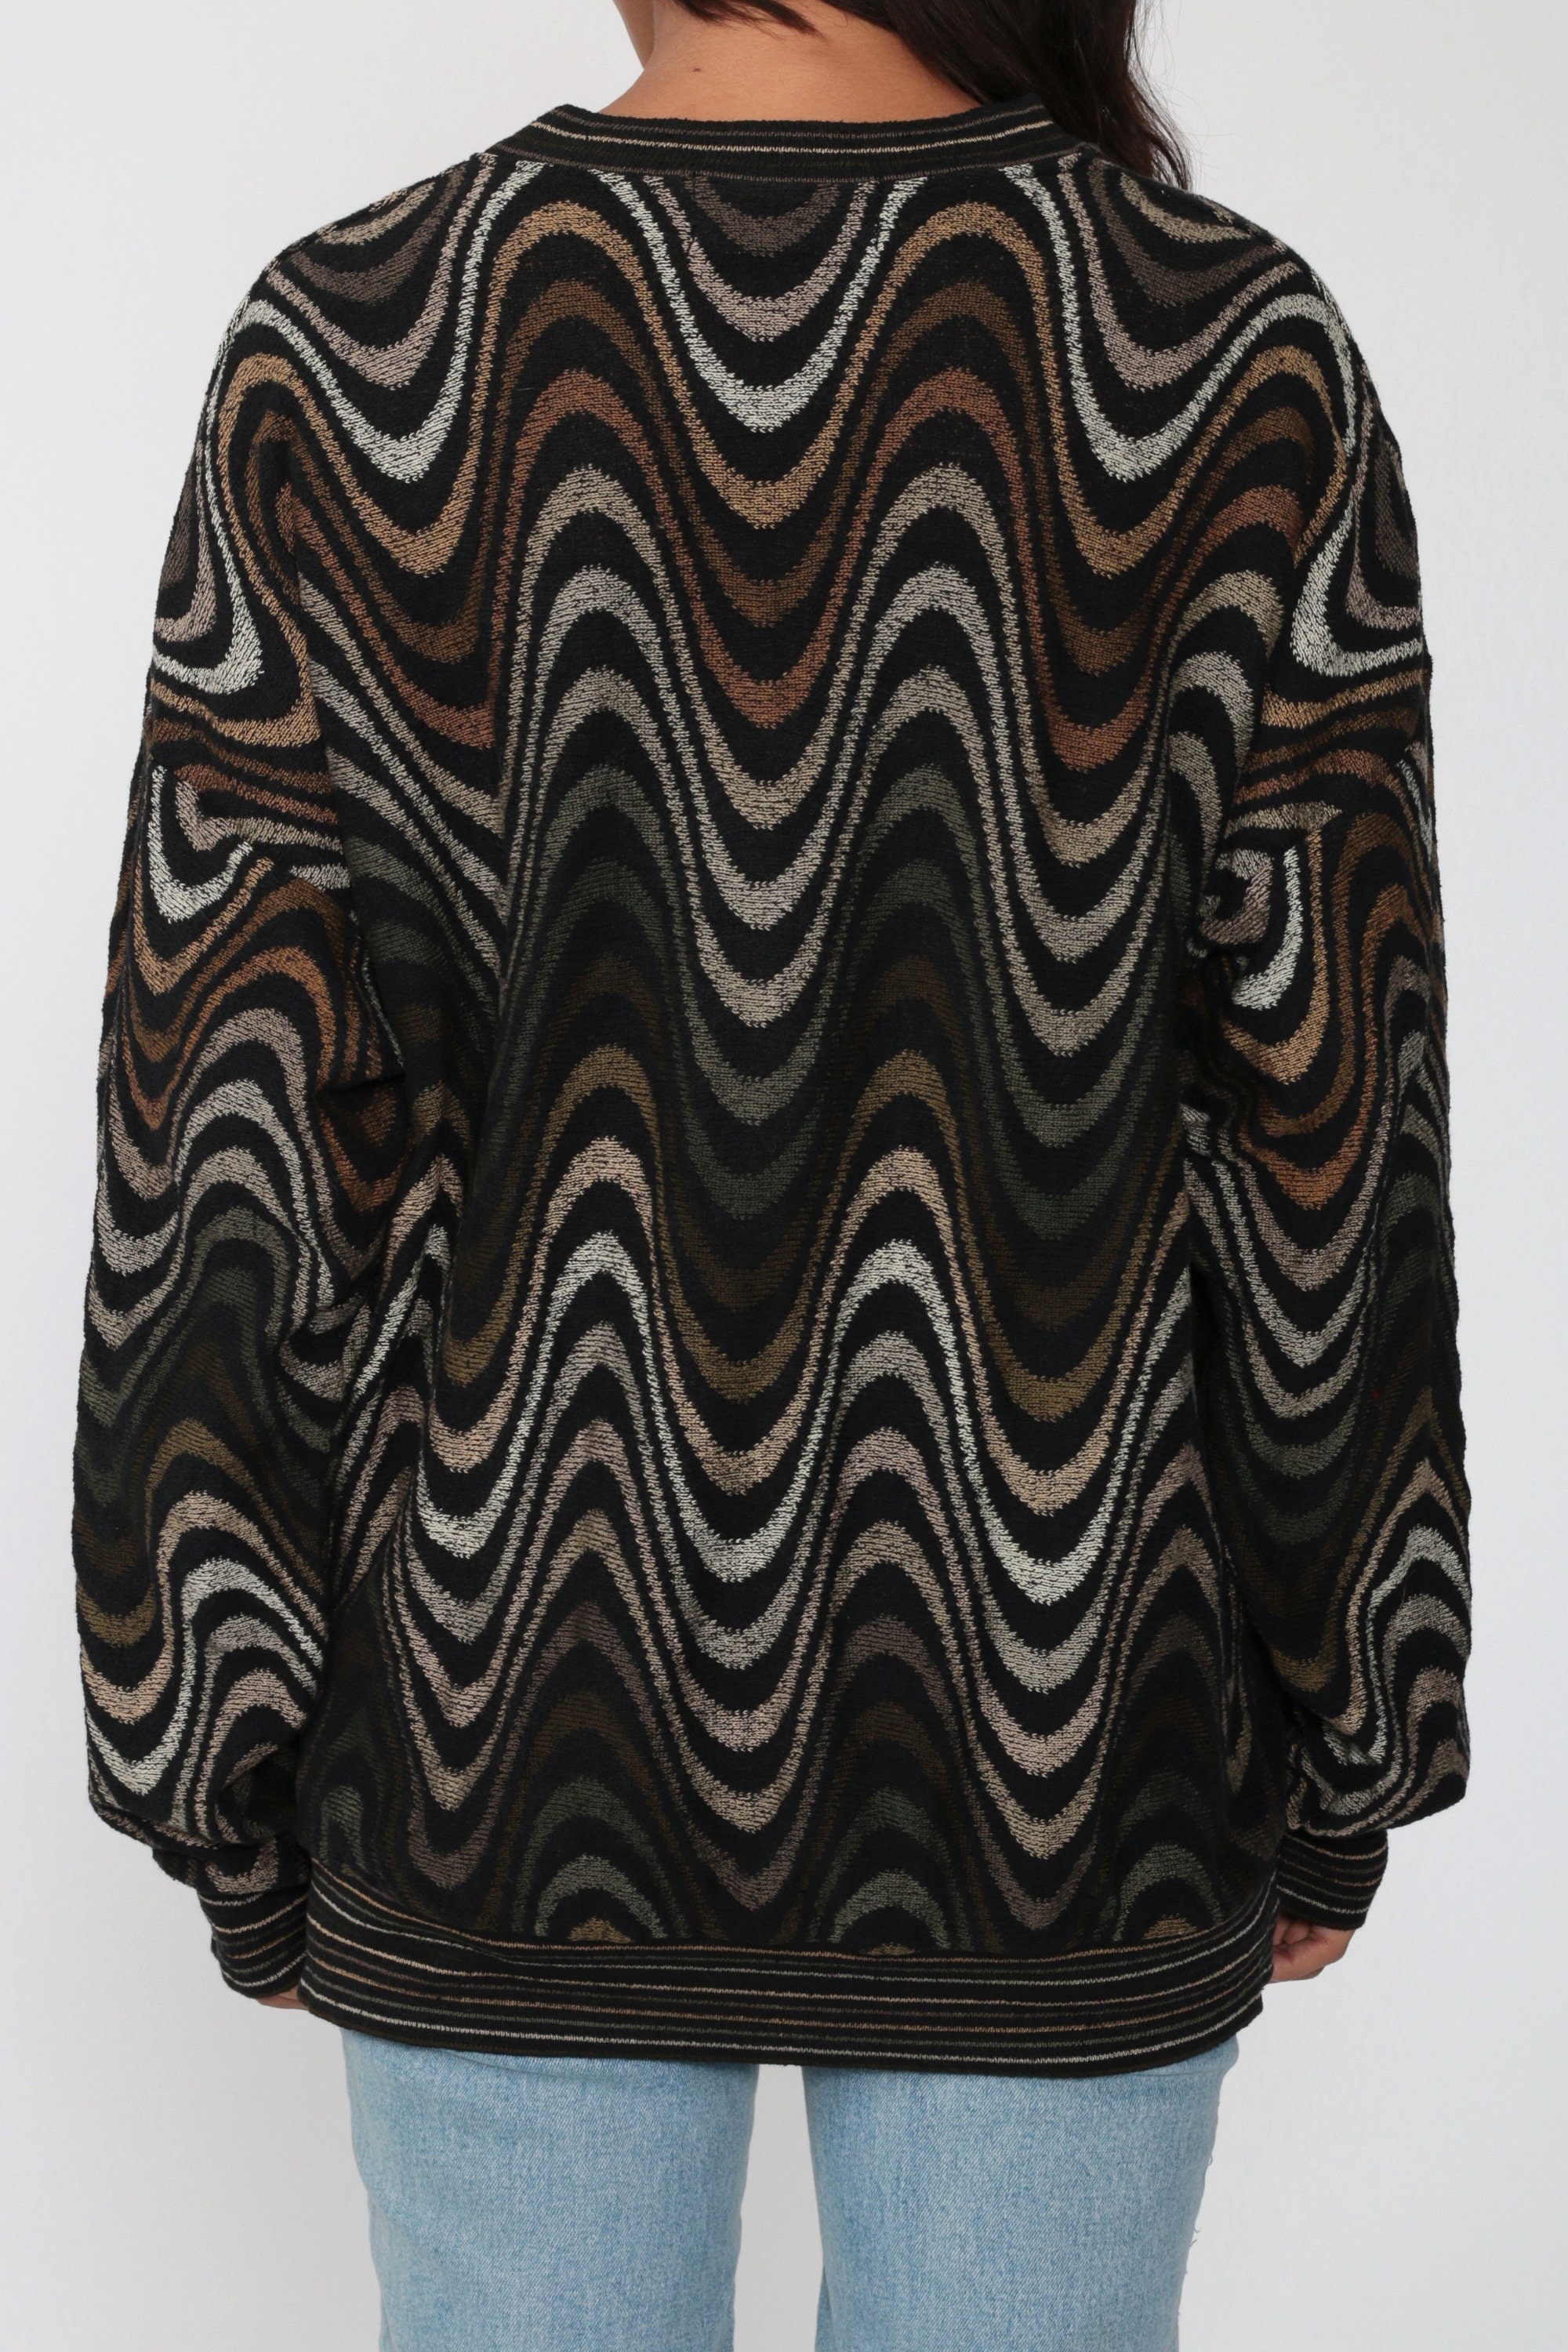 Geometric Sweater 80s CHEVRON Print Slouchy Pullover Swirl Print ...